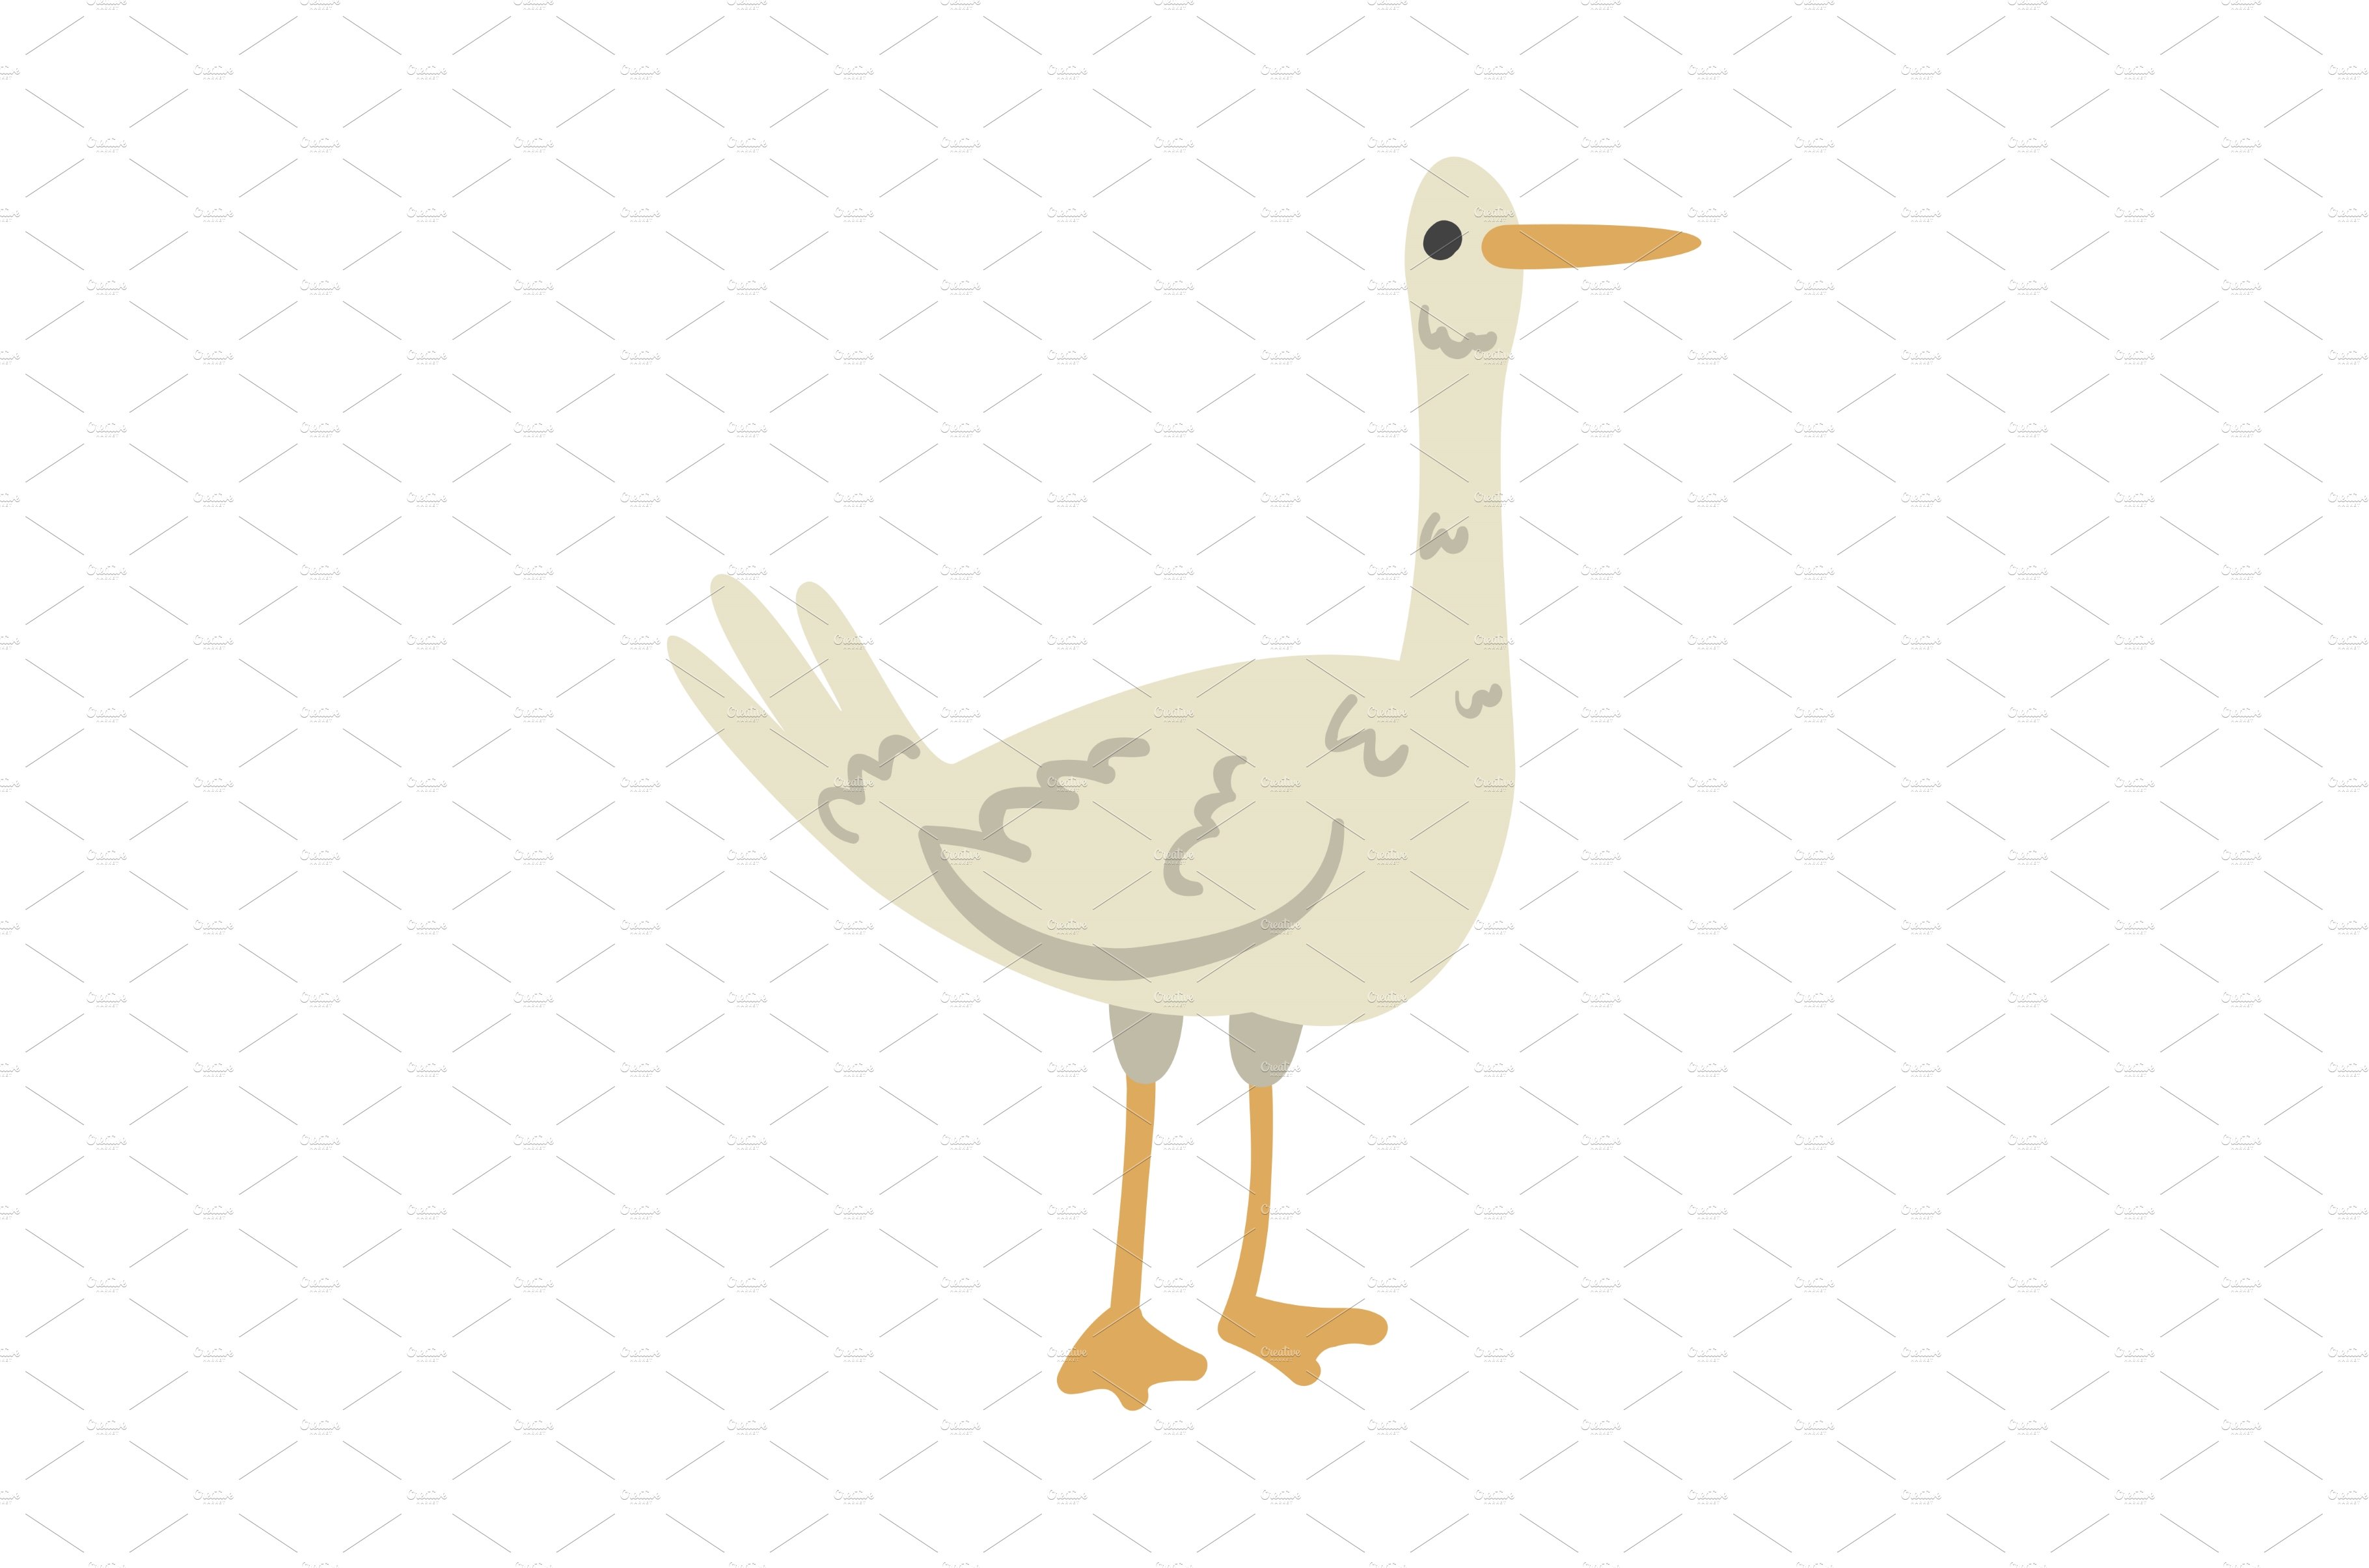 Goose Farm Bird, Poultry Breeding cover image.